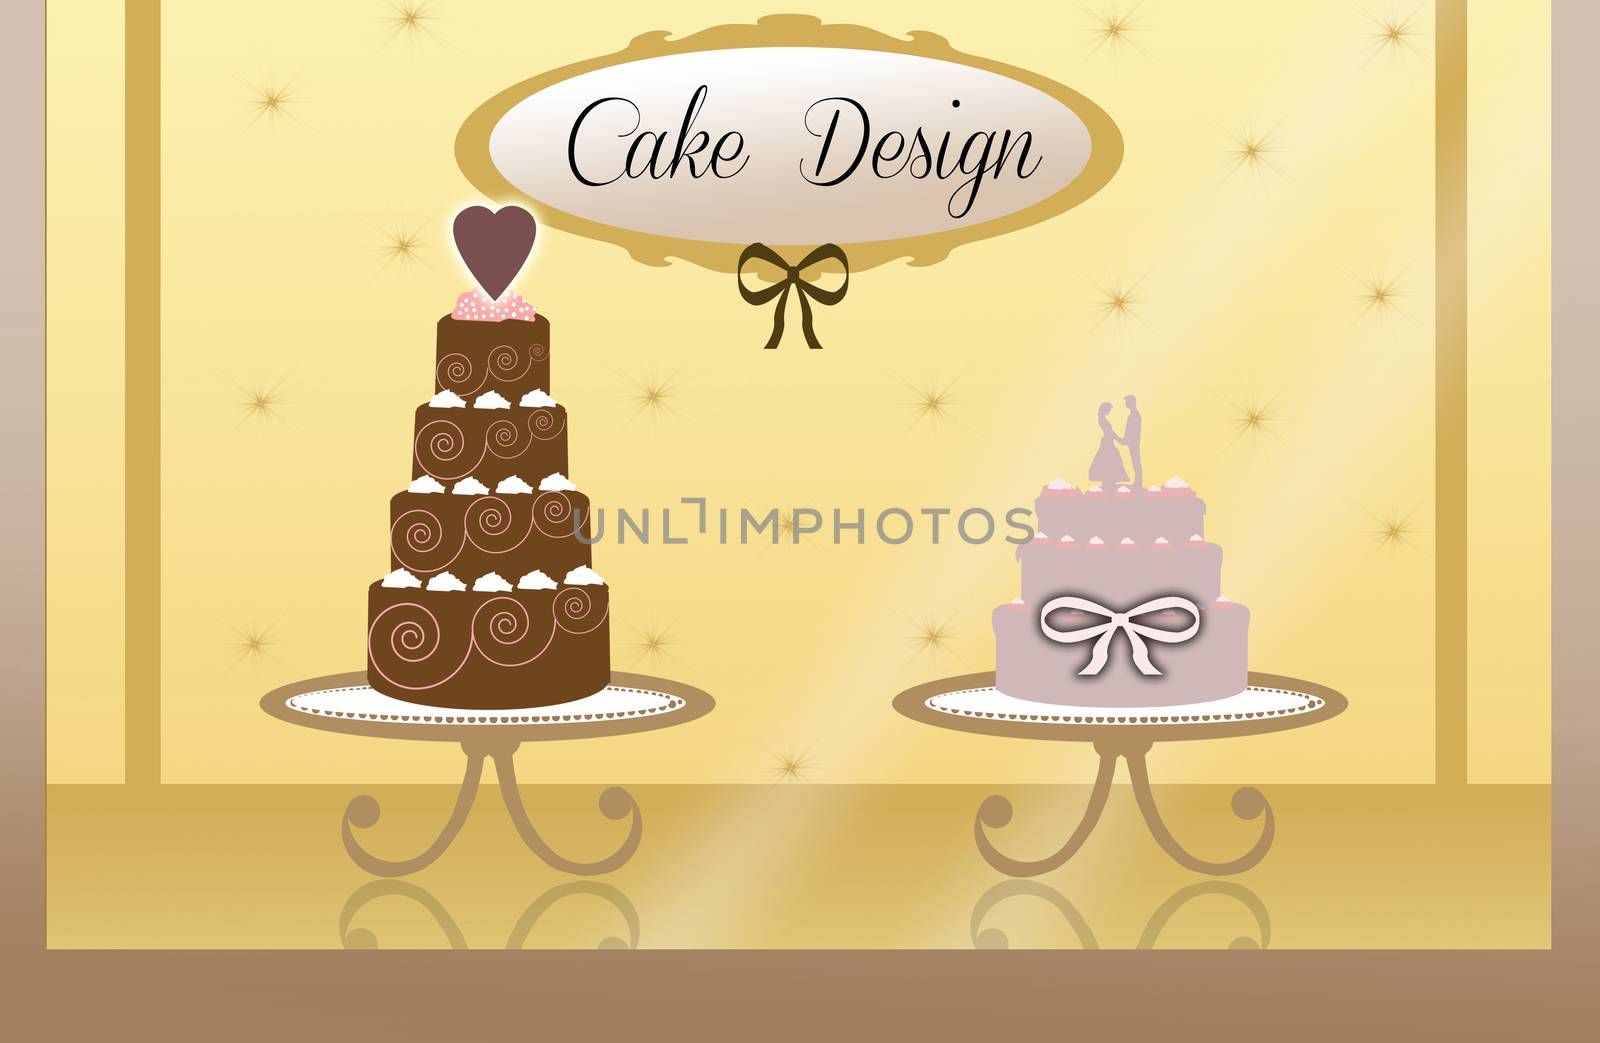 Cake design by adrenalina